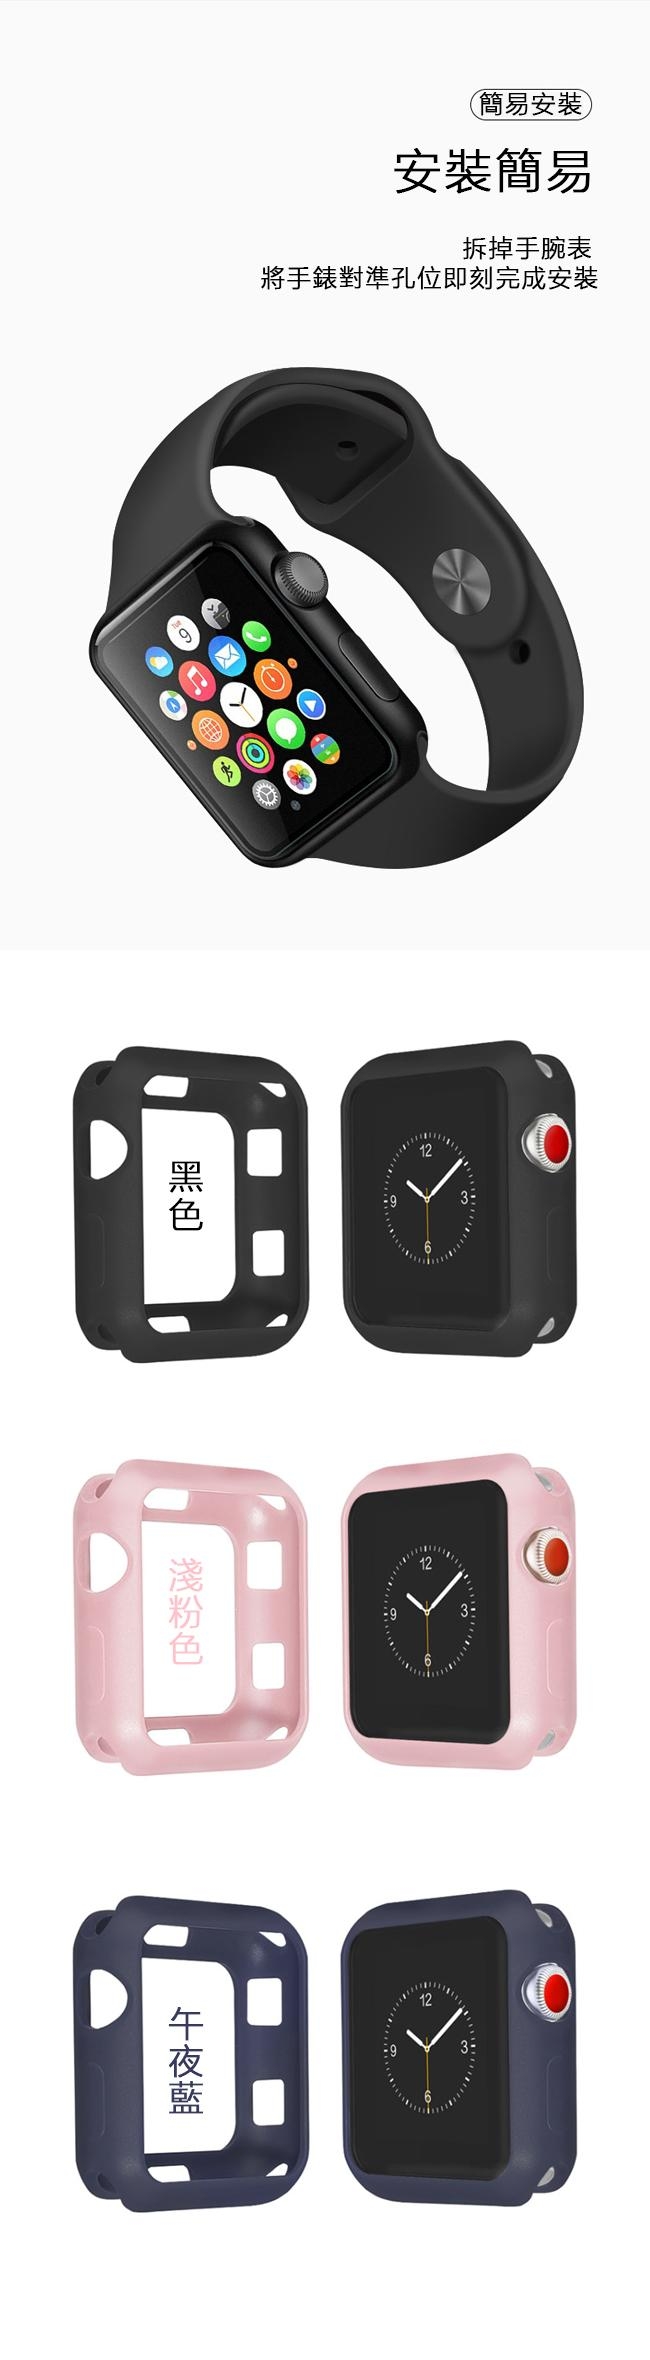 Apple Watch 1/2/3代 磨砂TPU保護殼 軟殼 防摔 手錶保護套